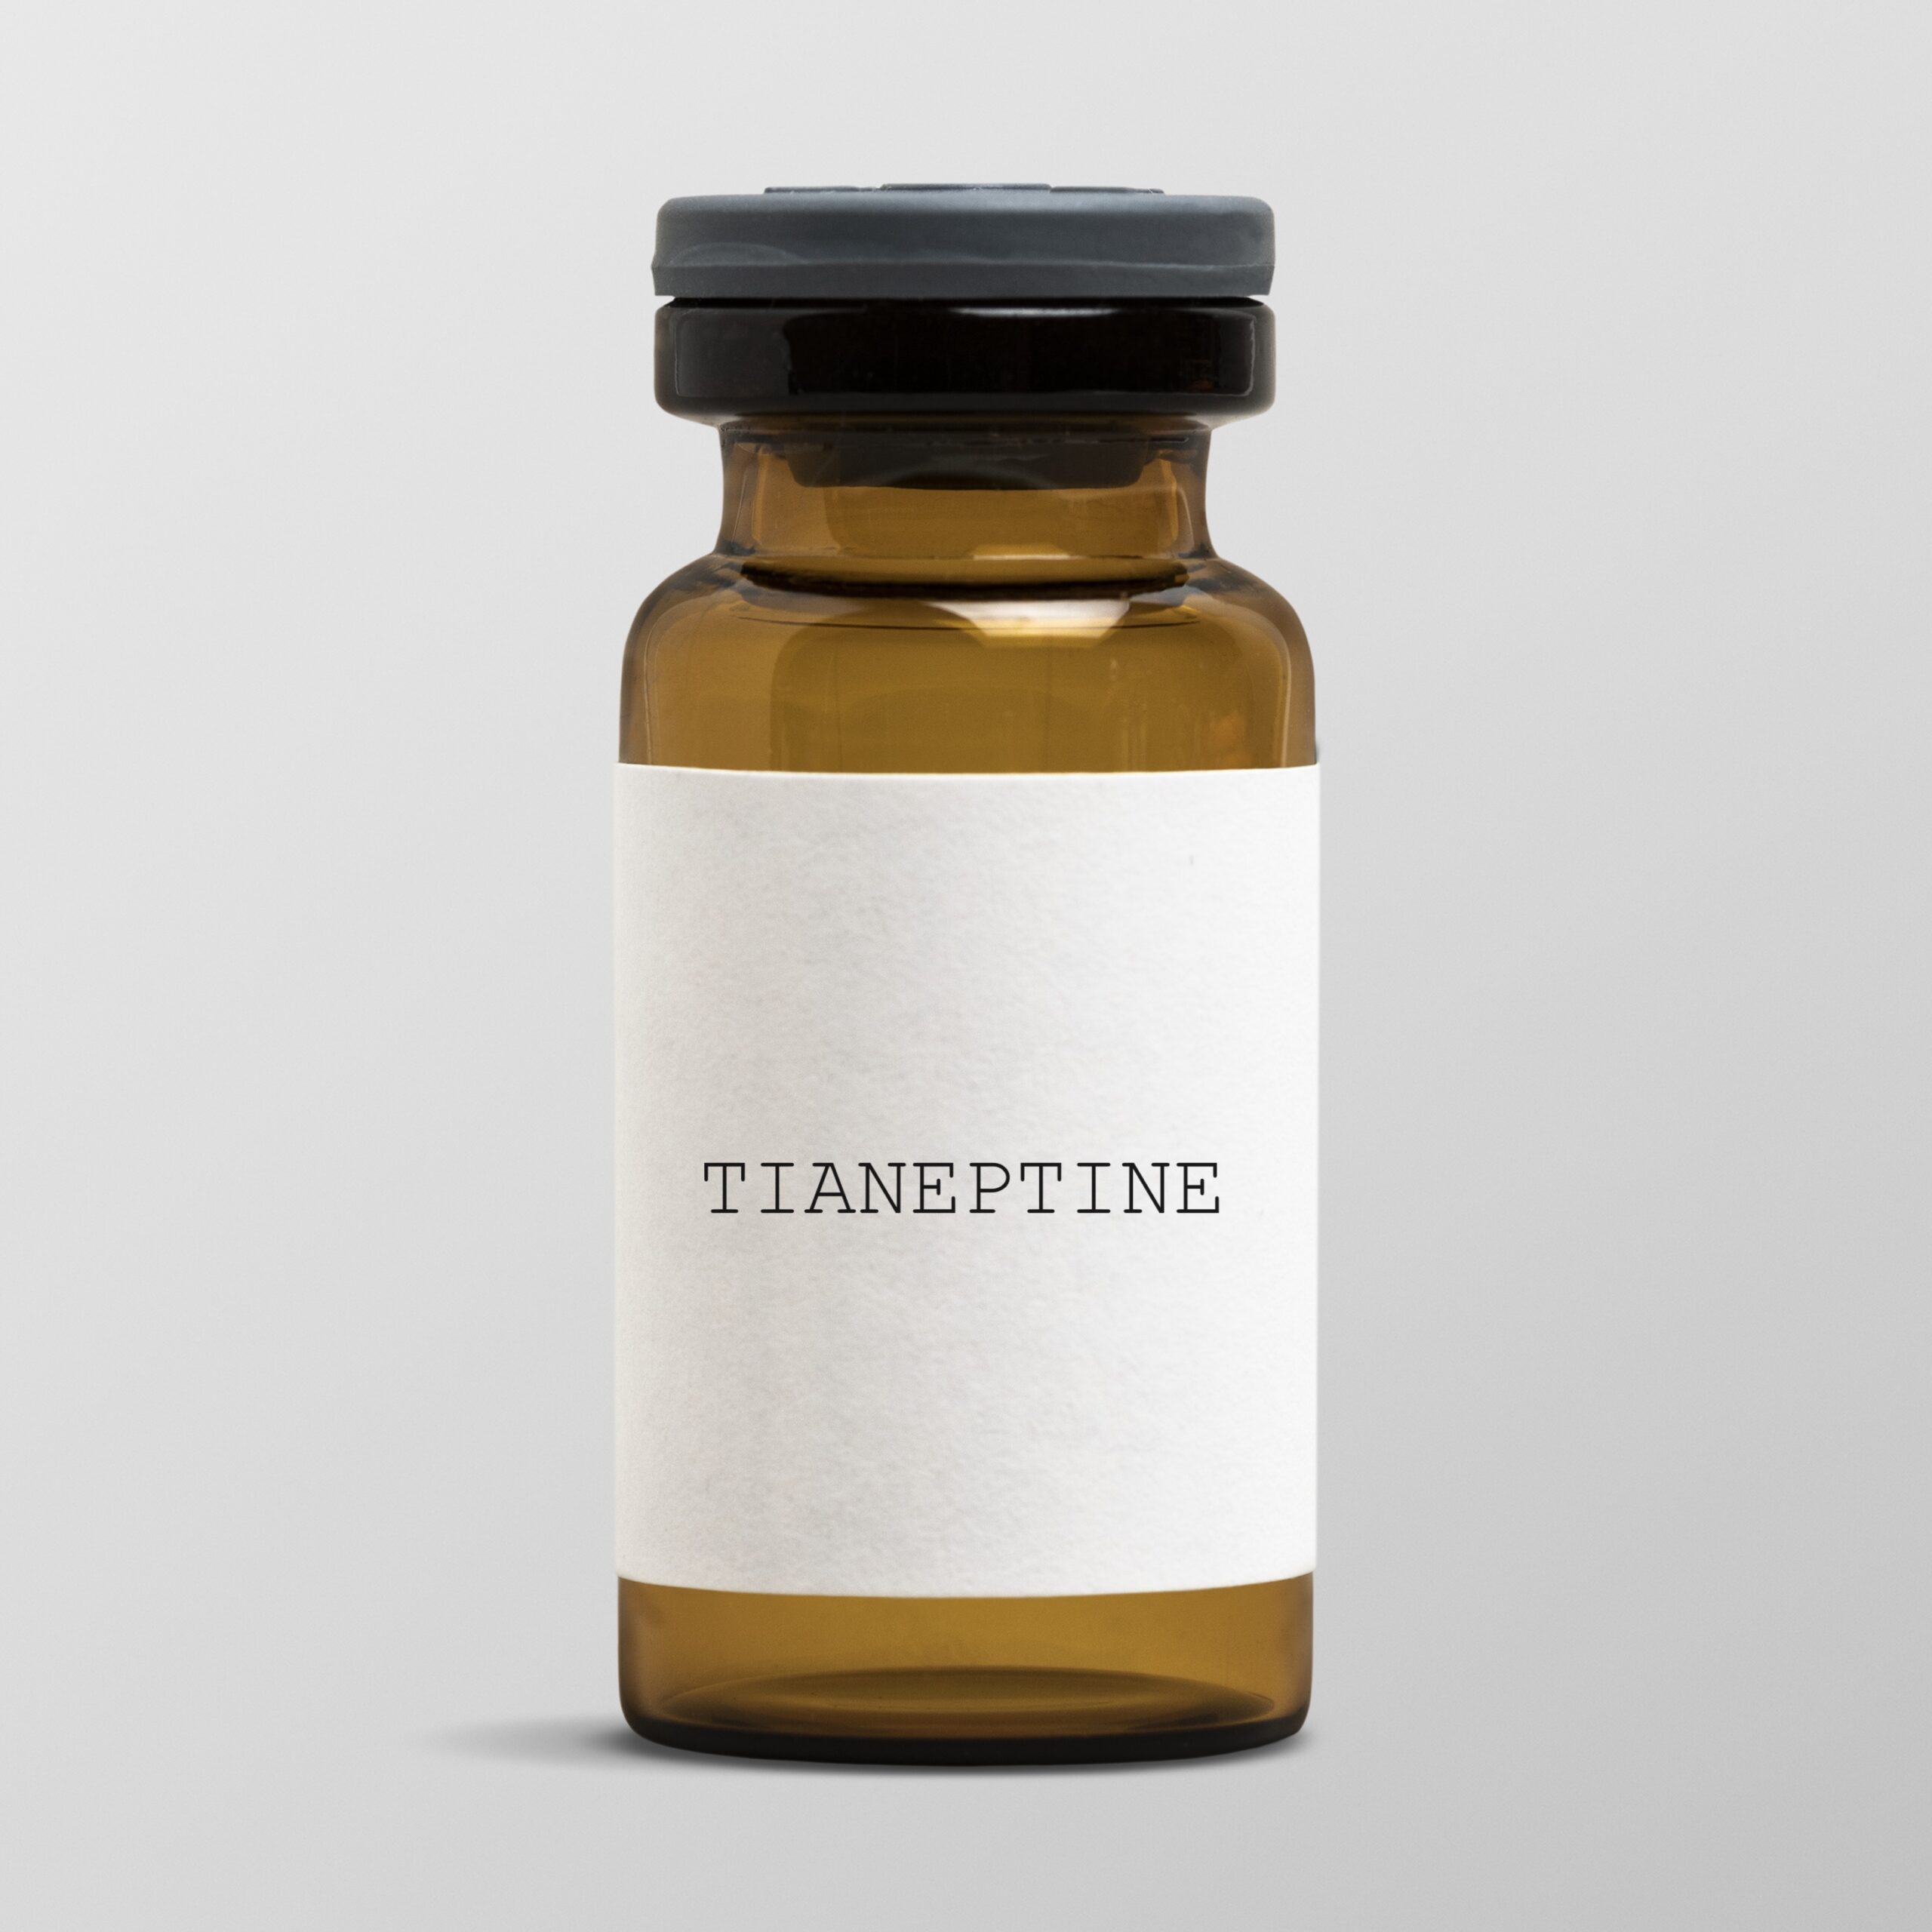 tianeptine